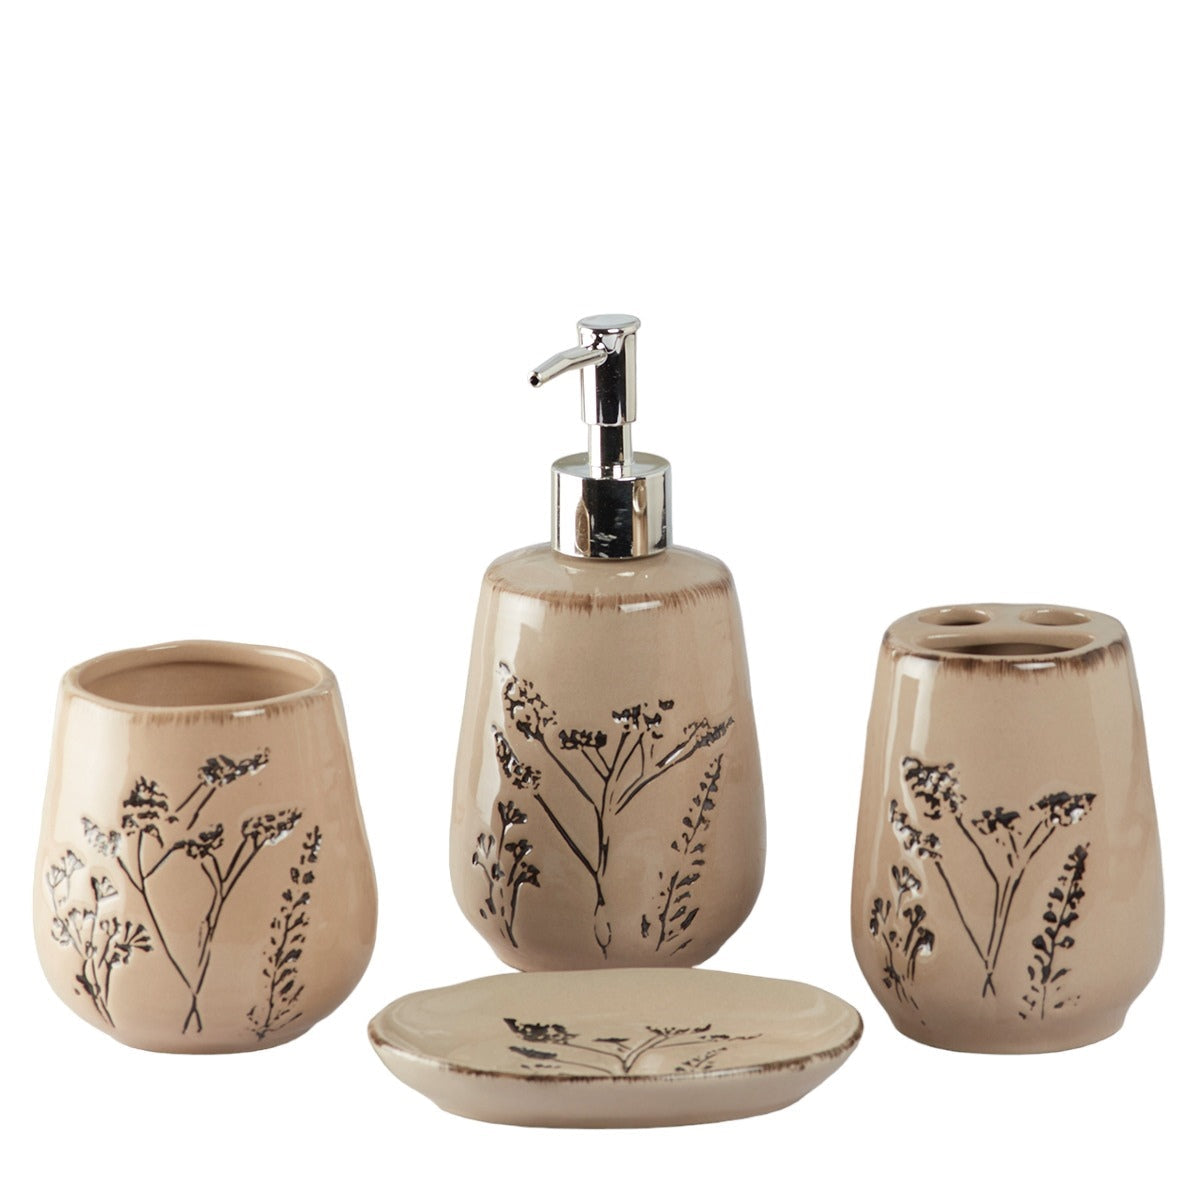 Ceramic Bathroom Accessories Set of 4 Bath Set with Soap Dispenser (9888)